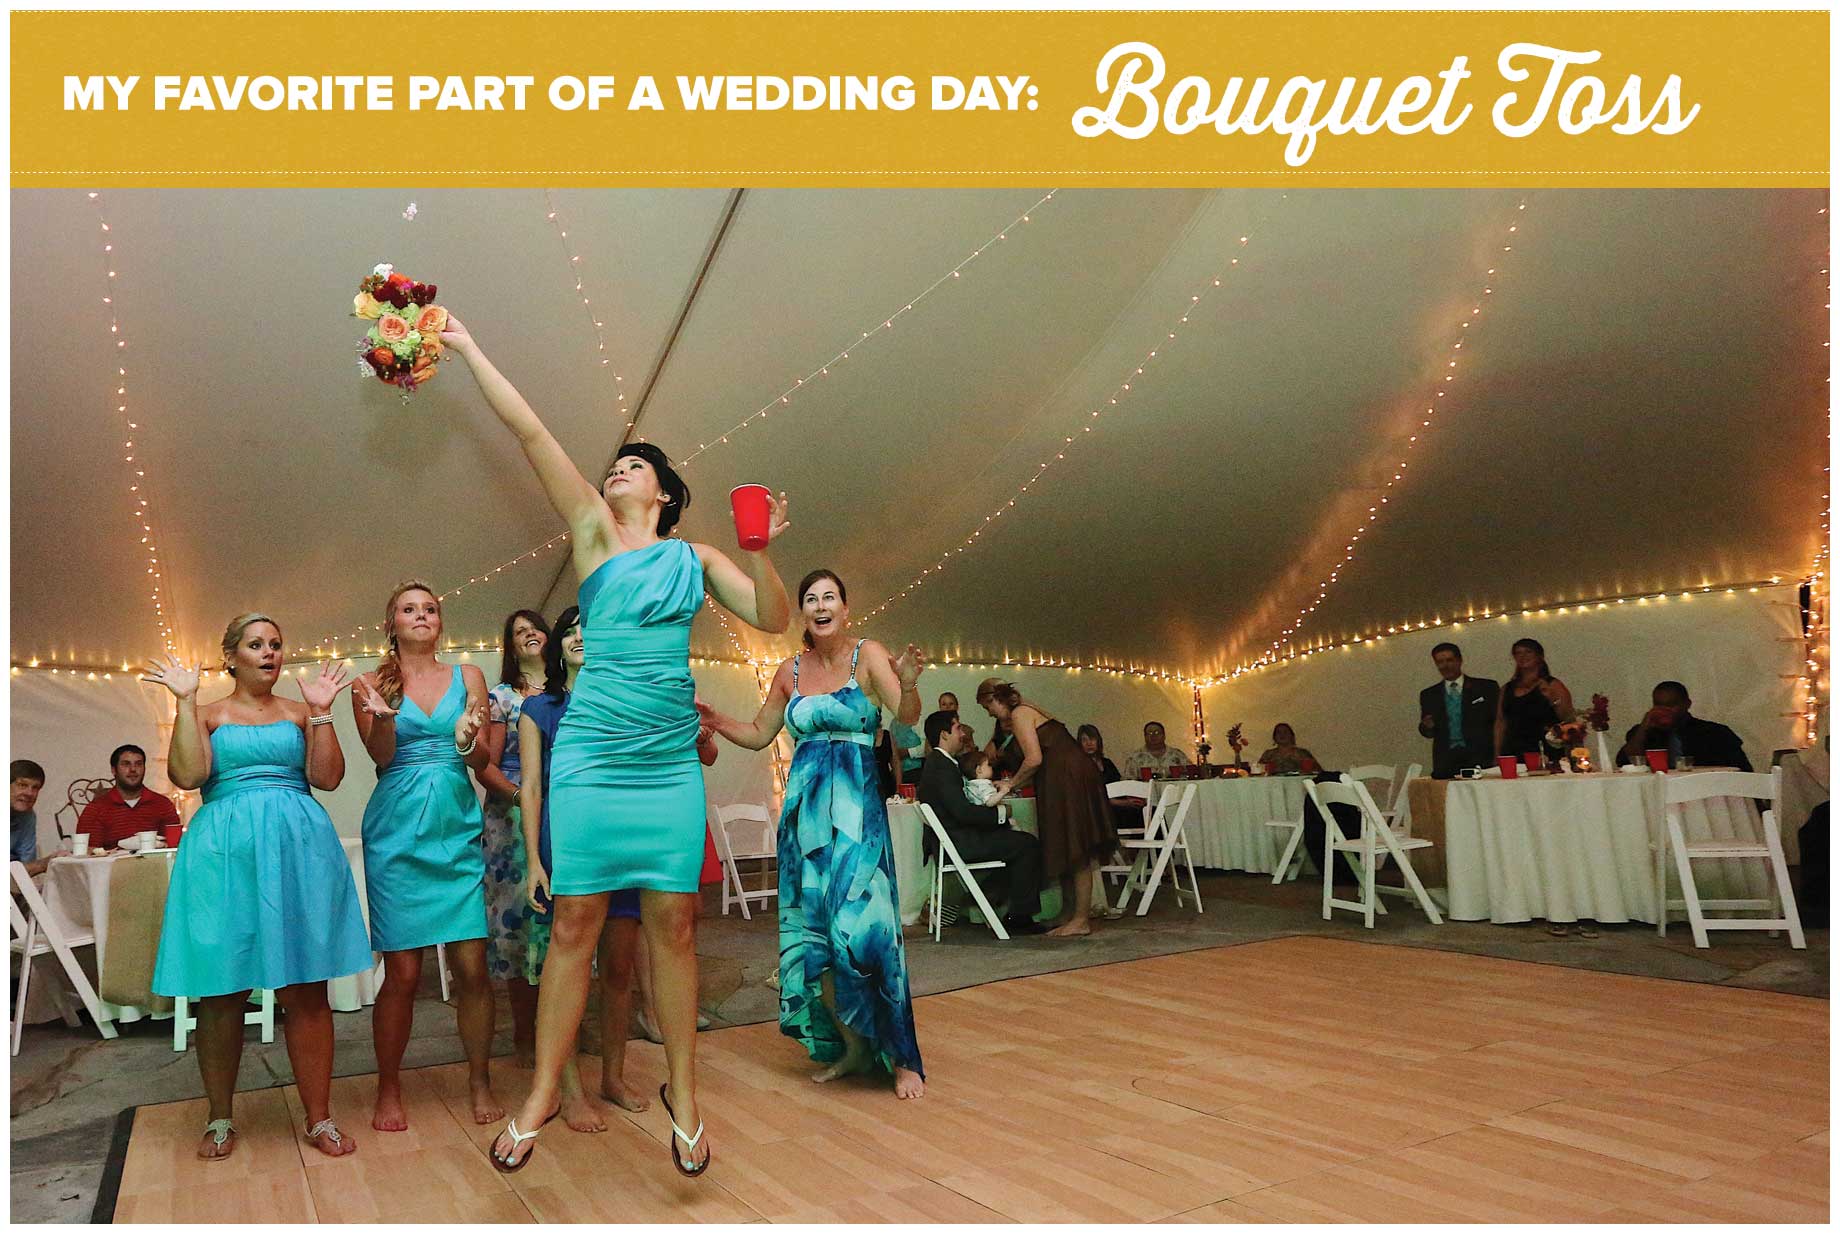 15153my favorite part of a wedding day: bouquet toss